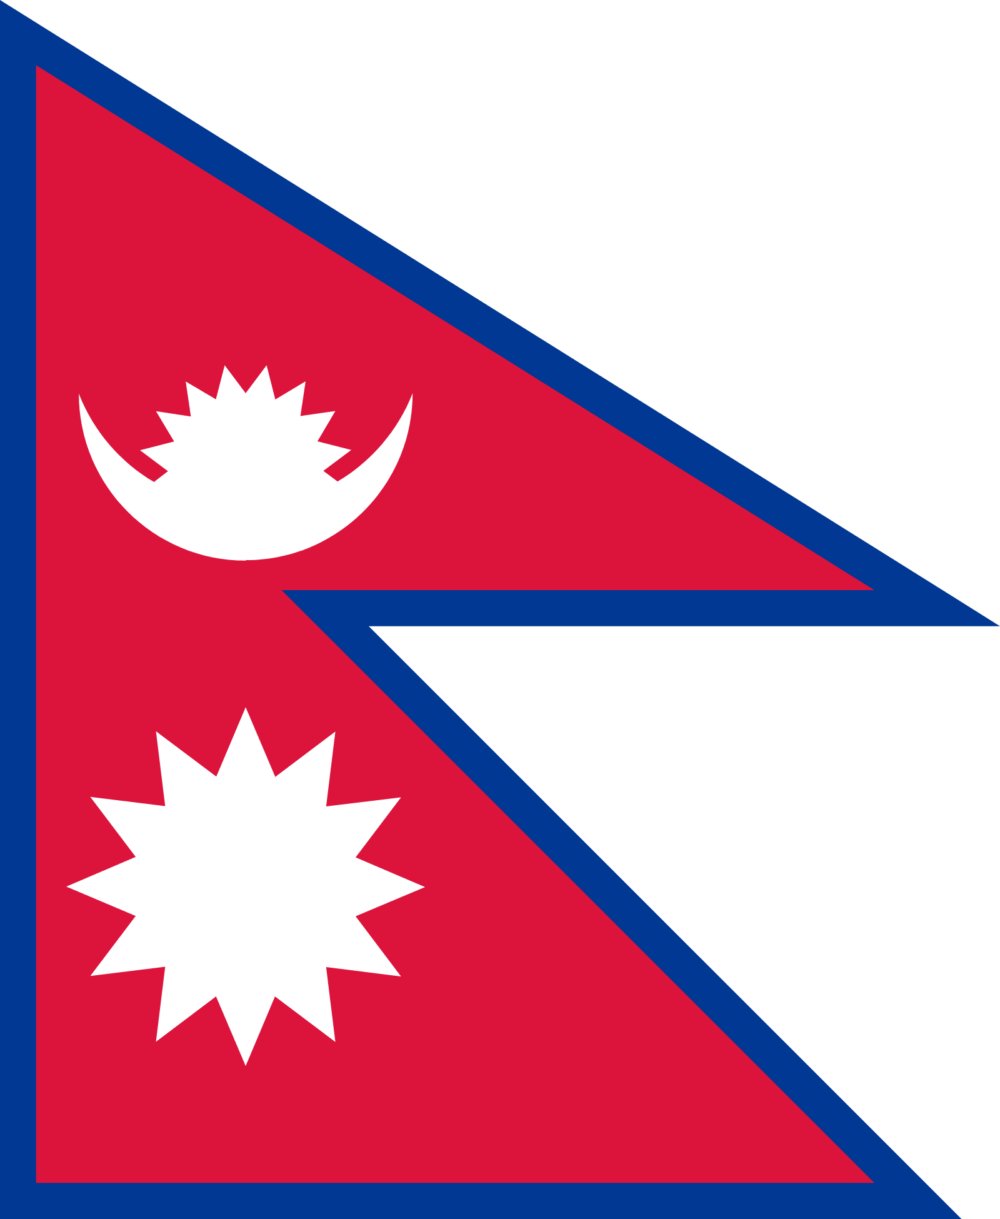 70-interesnyx-faktov-o-nepale